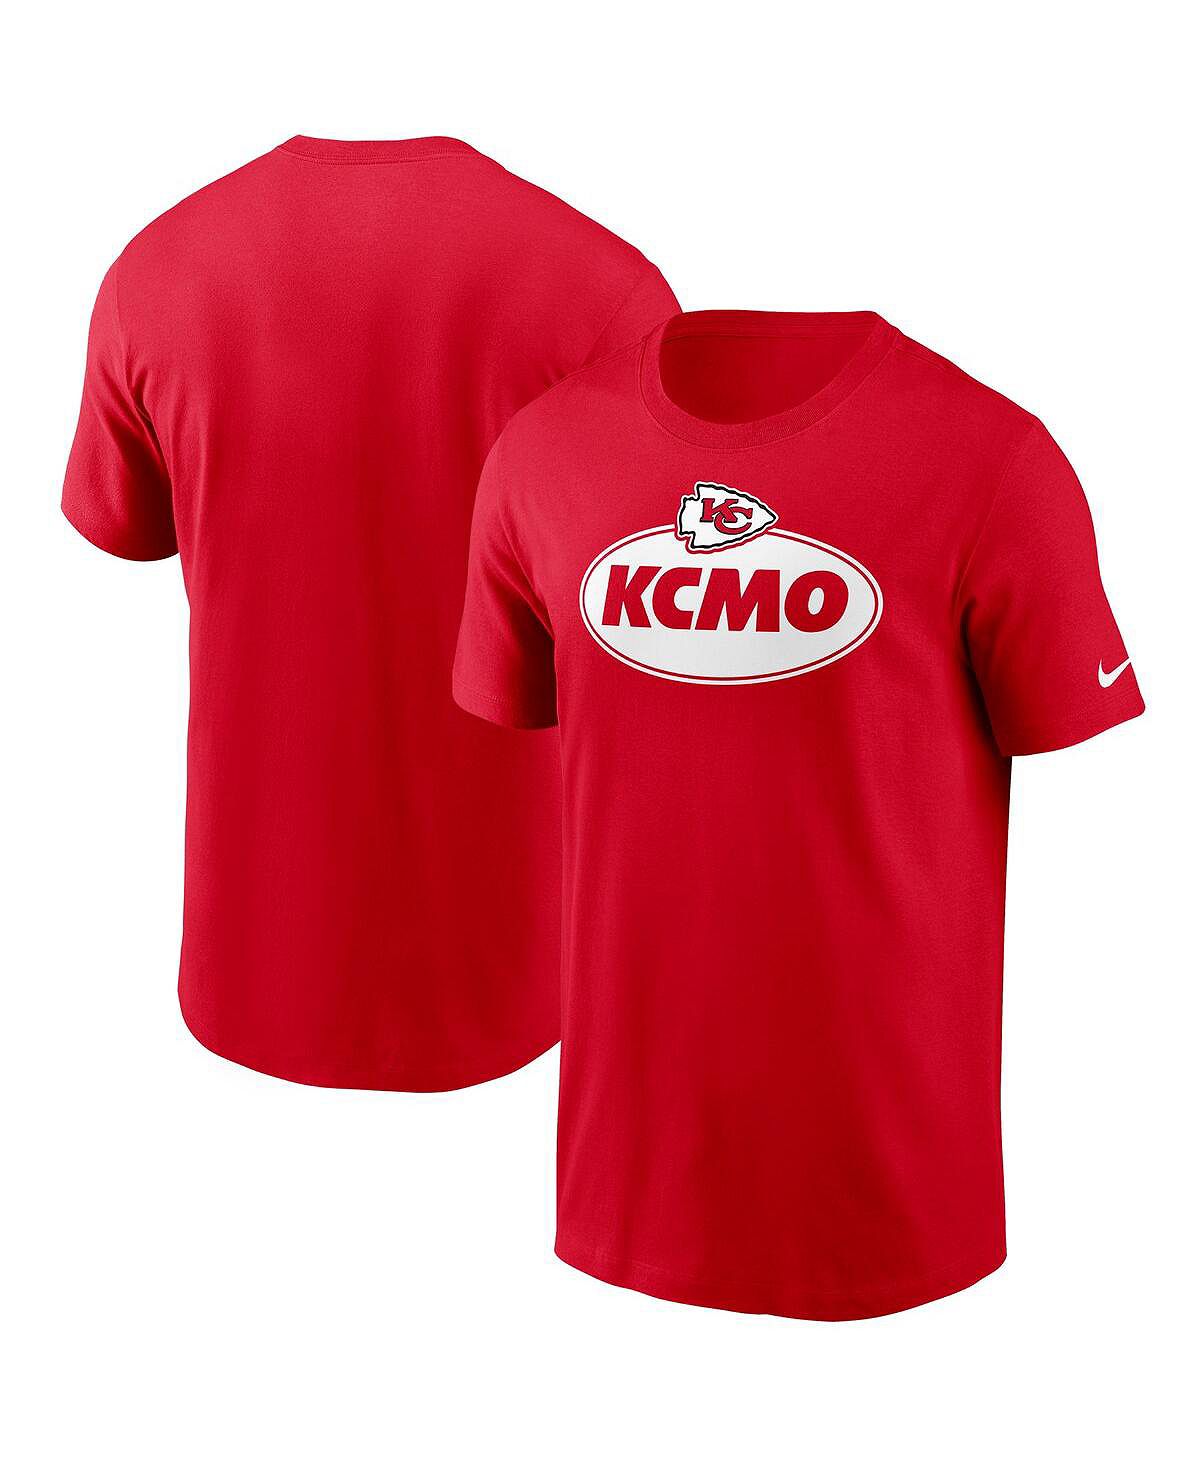 Мужская красная футболка kansas city chiefs hometown collection kcmo Nike, красный